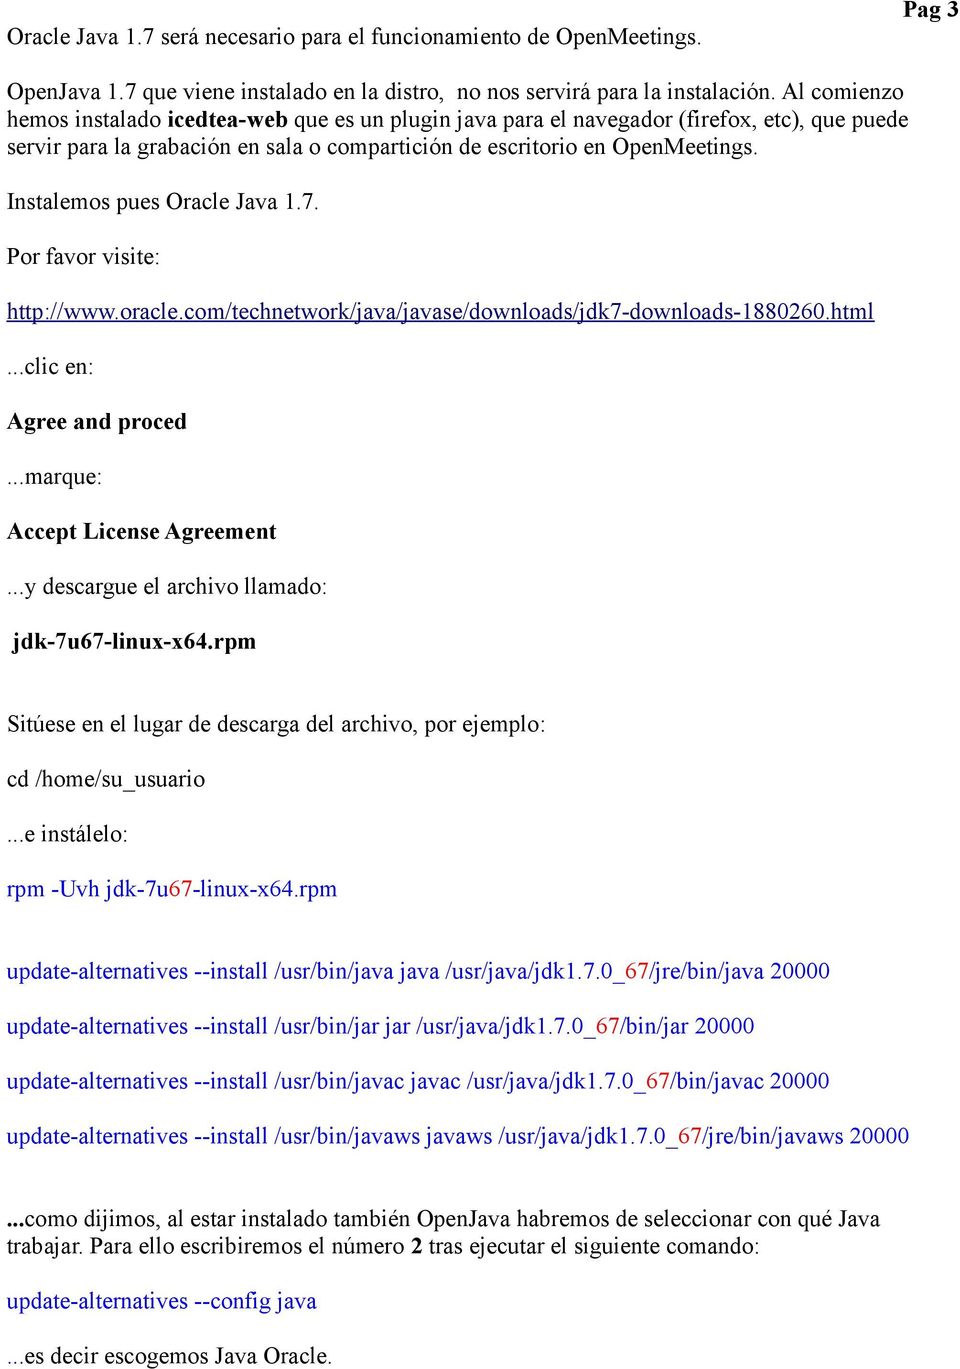 Instalemos pues Oracle Java 1.7. Por favor visite: http://www.oracle.com/technetwork/java/javase/downloads/jdk7-downloads-1880260.html...clic en: Agree and proced...marque: Accept License Agreement.